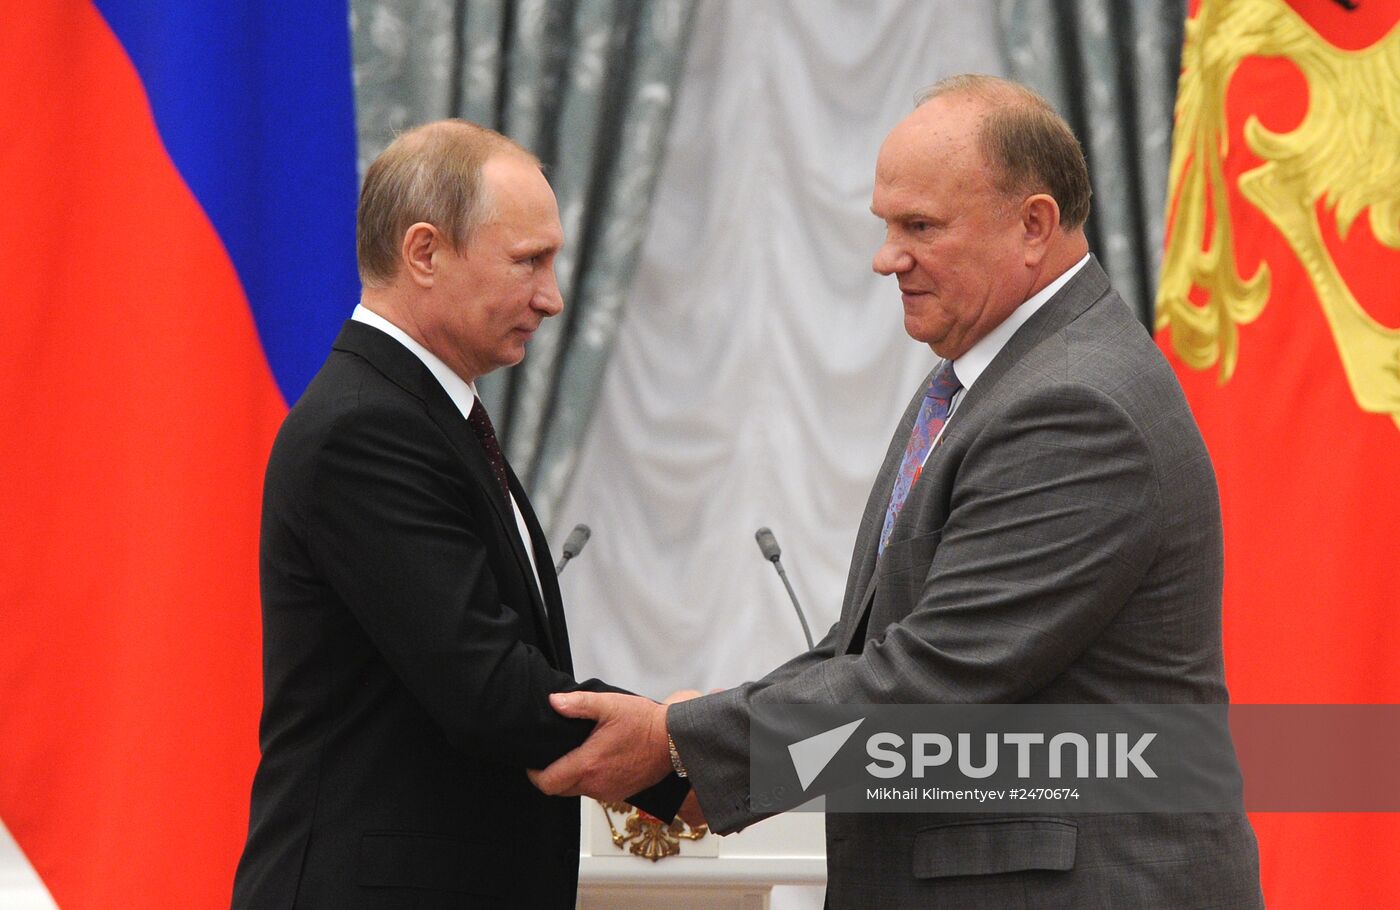 Putin presents government awards in Kremlin